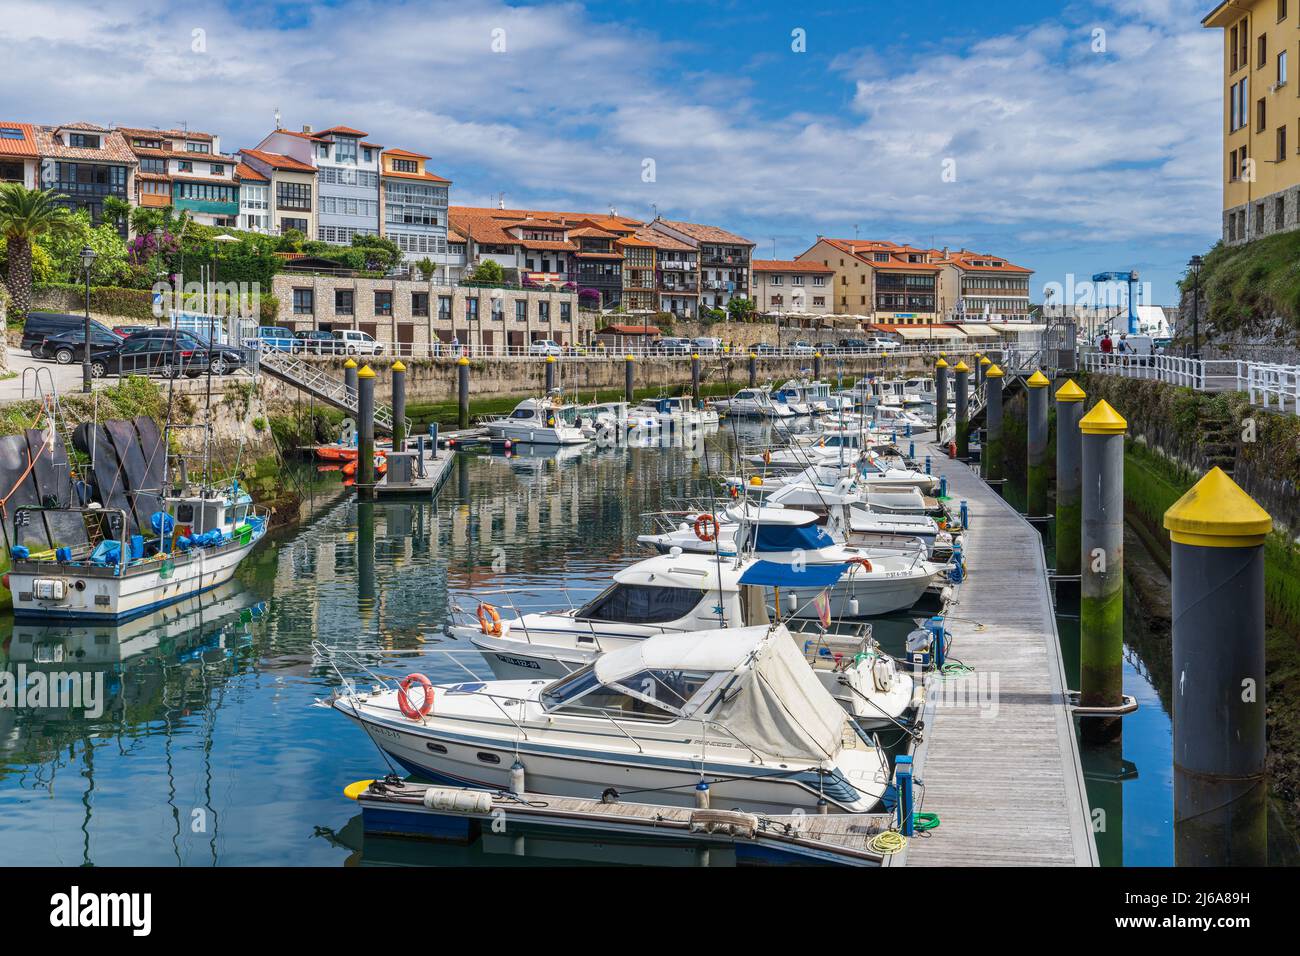 Llanes, Asturies, Espagne, 24 juillet 2021. Port de la ville de Llanes dans la mer Cantabrique, dans les Asturies. Banque D'Images